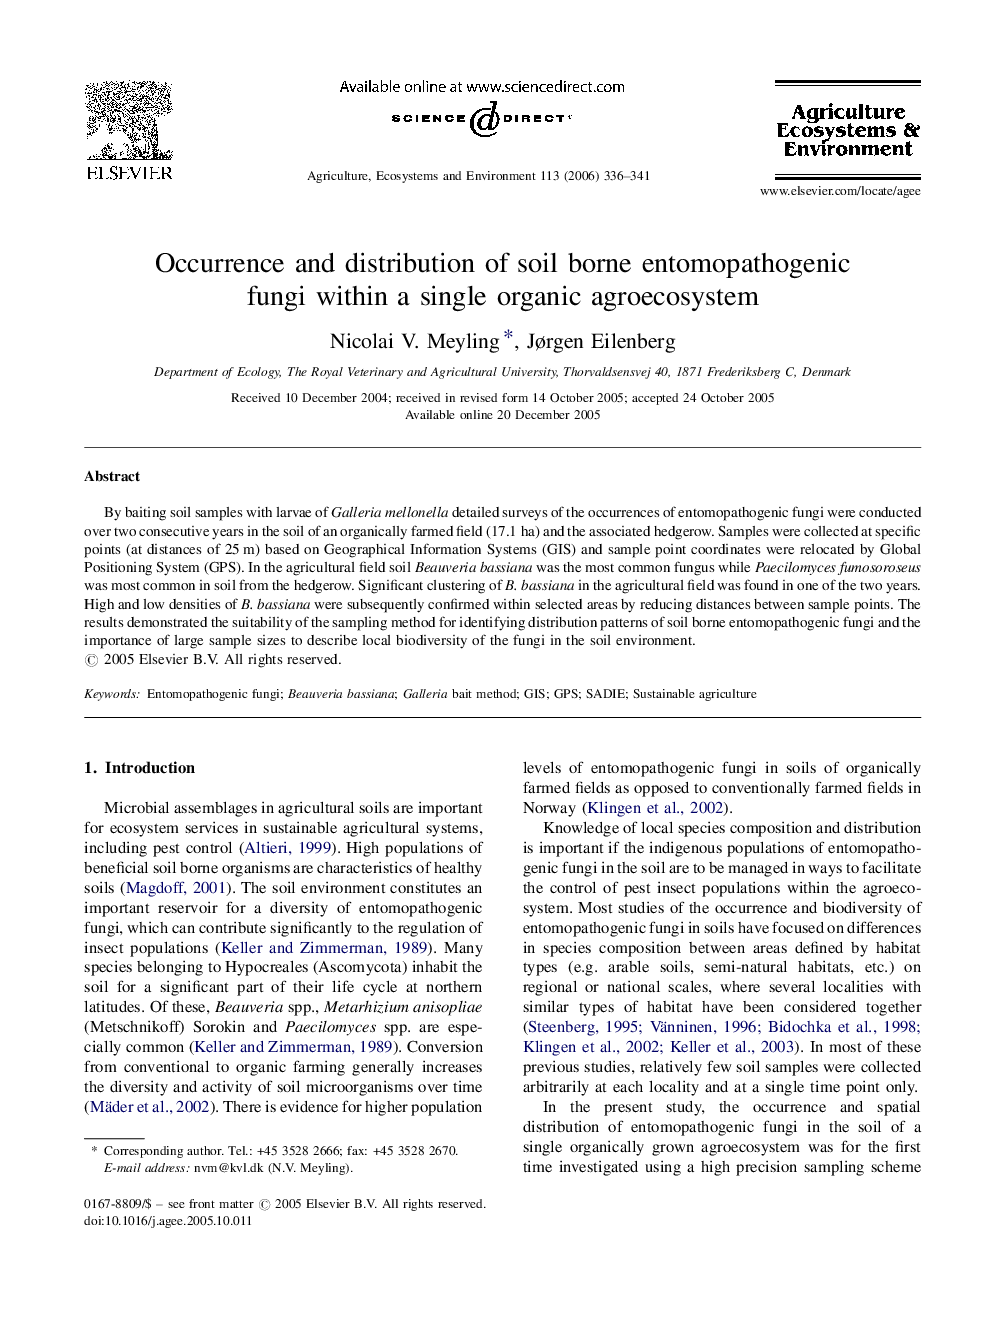 Occurrence and distribution of soil borne entomopathogenic fungi within a single organic agroecosystem